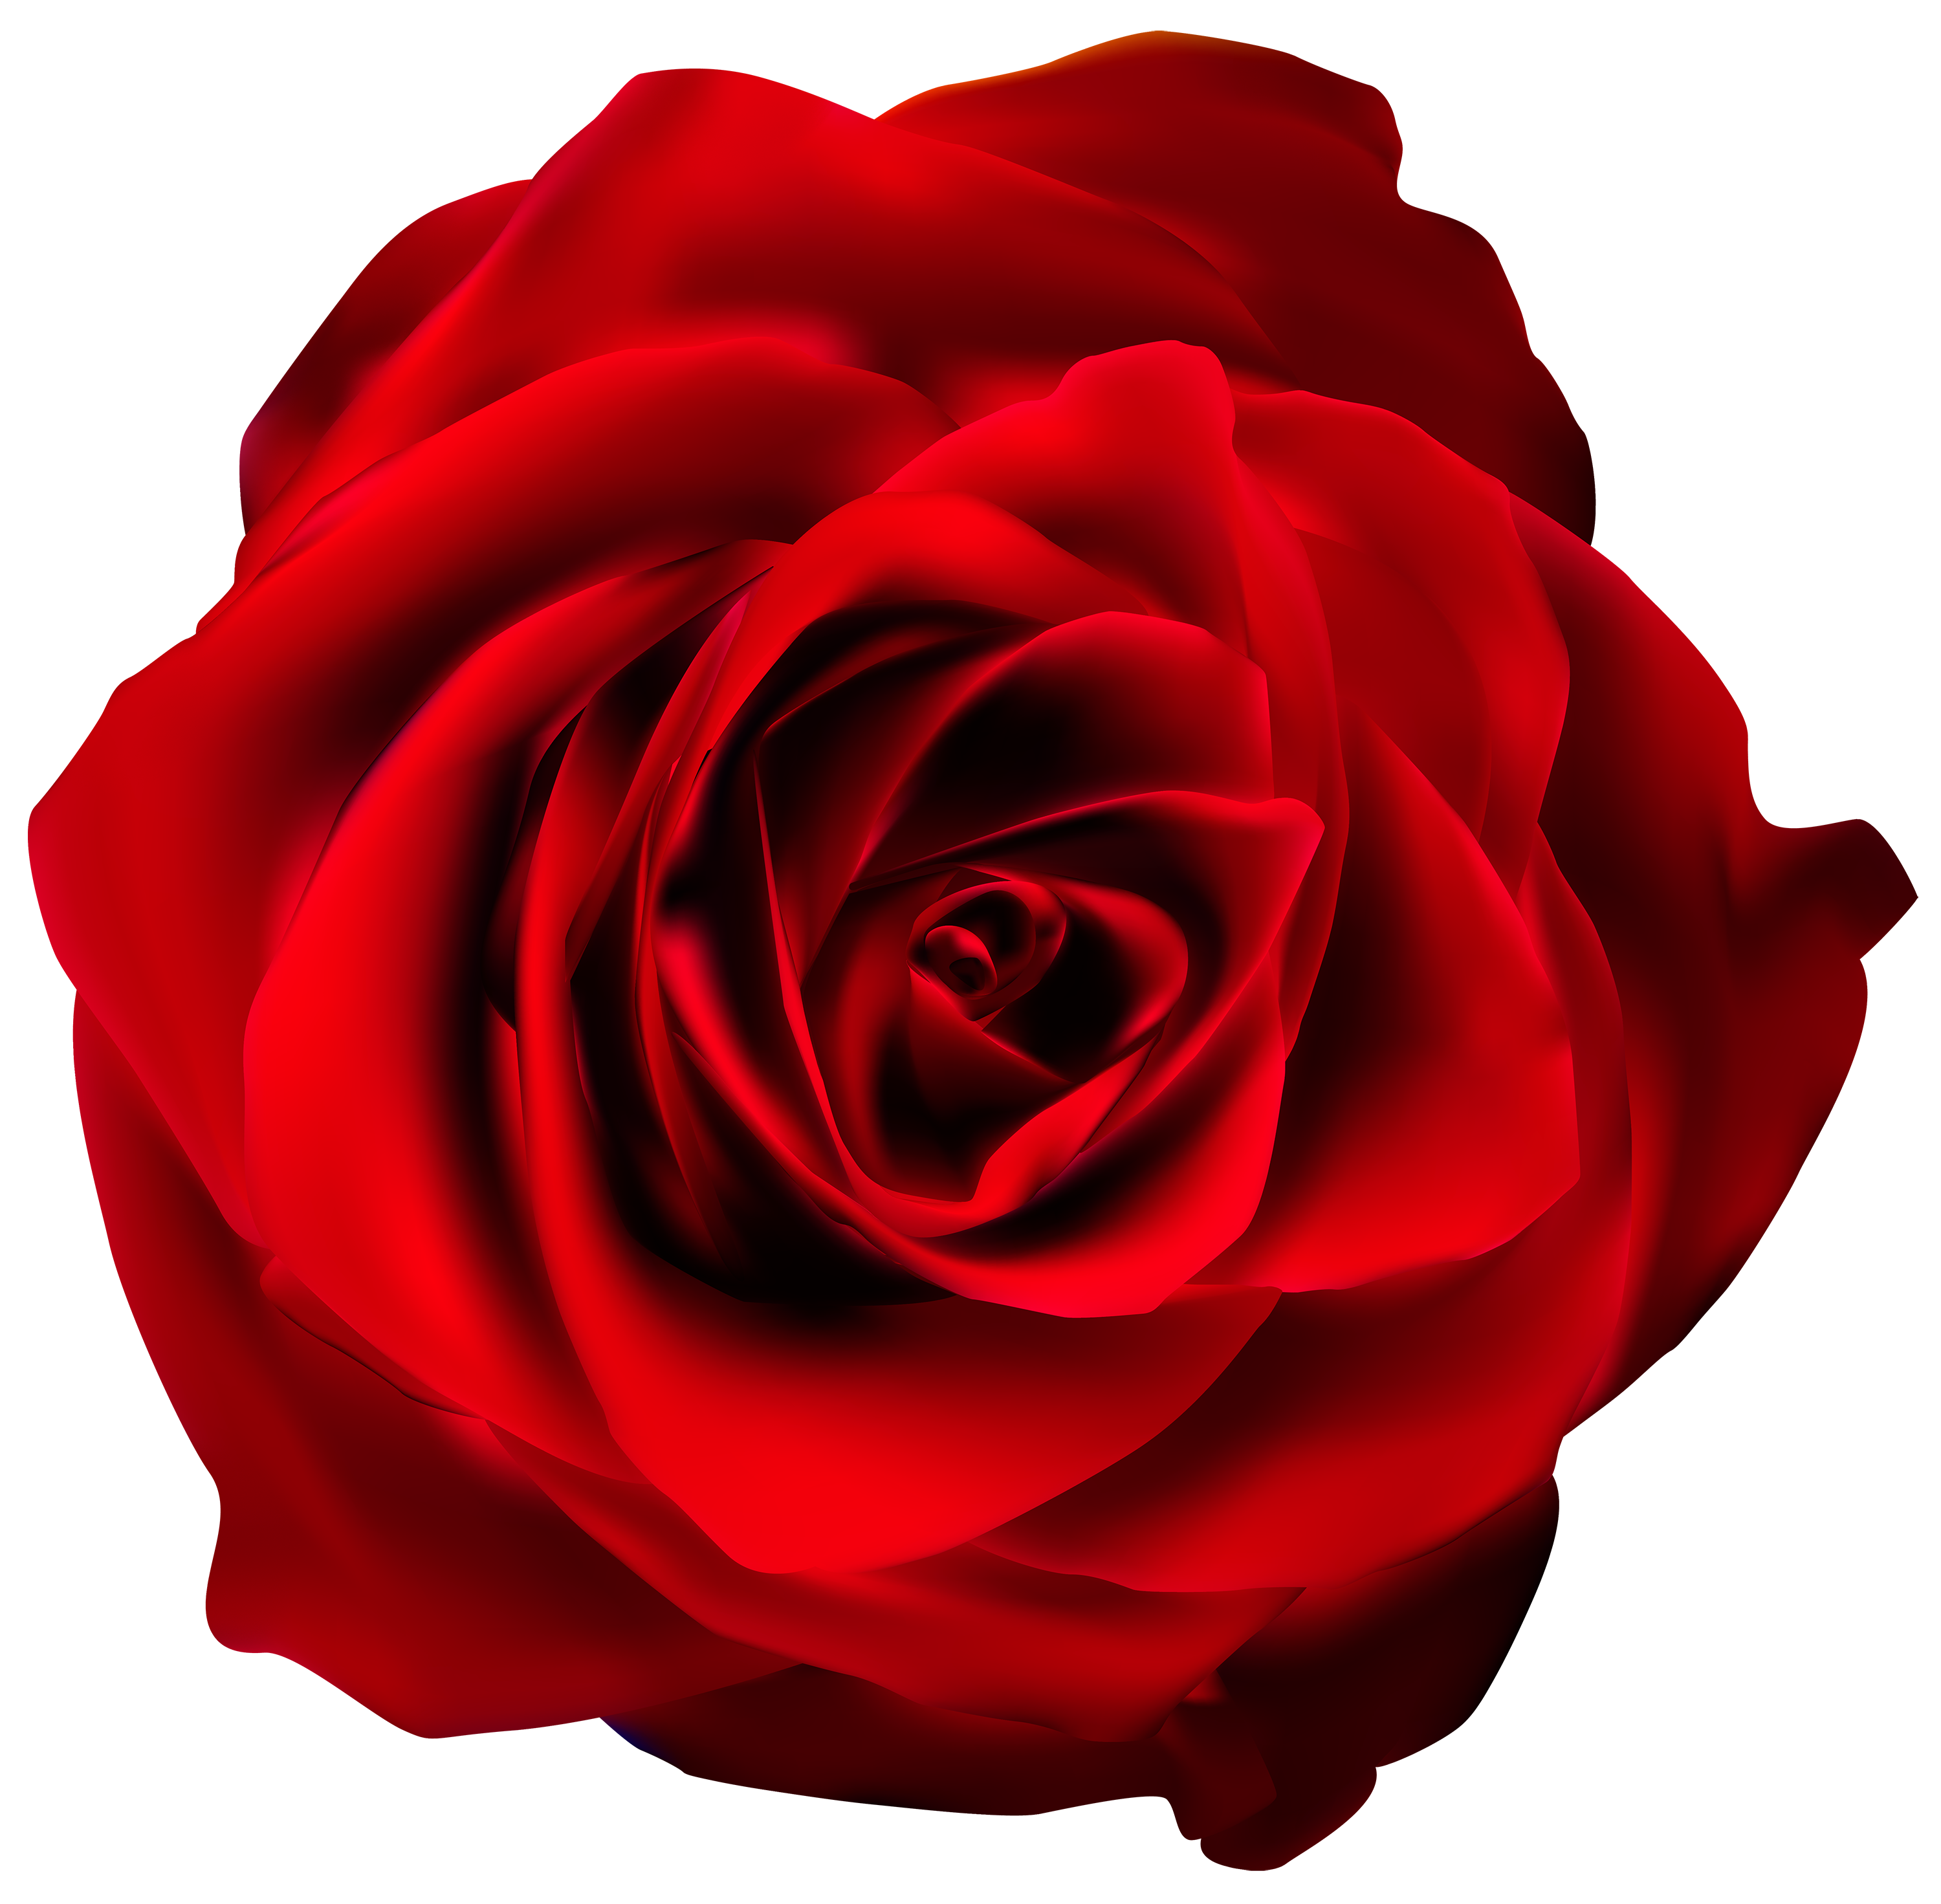 Red Rose Transparent Png Clip Art Image Clipart Best Clipart Best ...